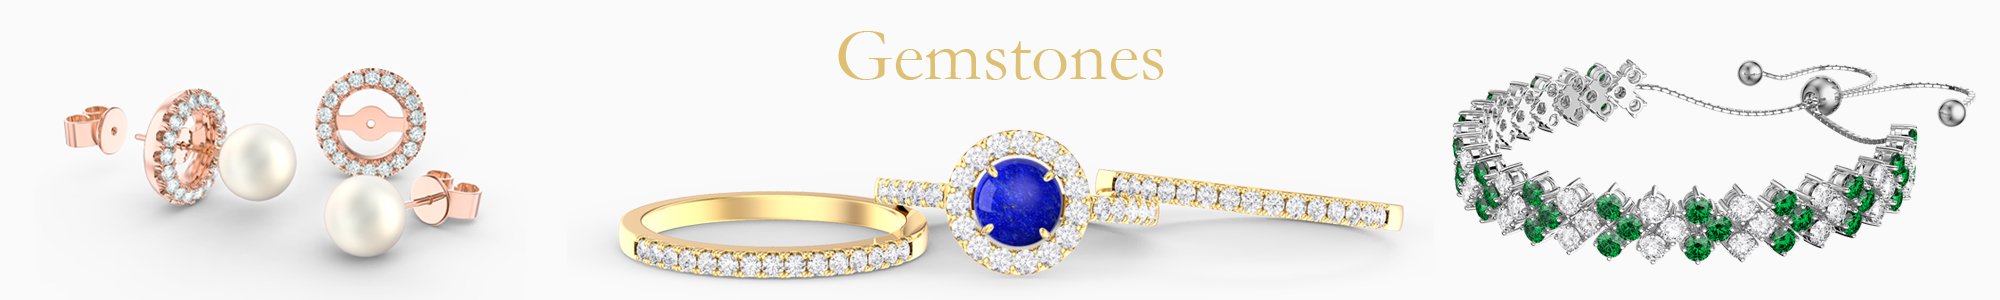 Gemstone Jewelry - from precious gemstones to Diamonds. From Silver to 18K Gold.